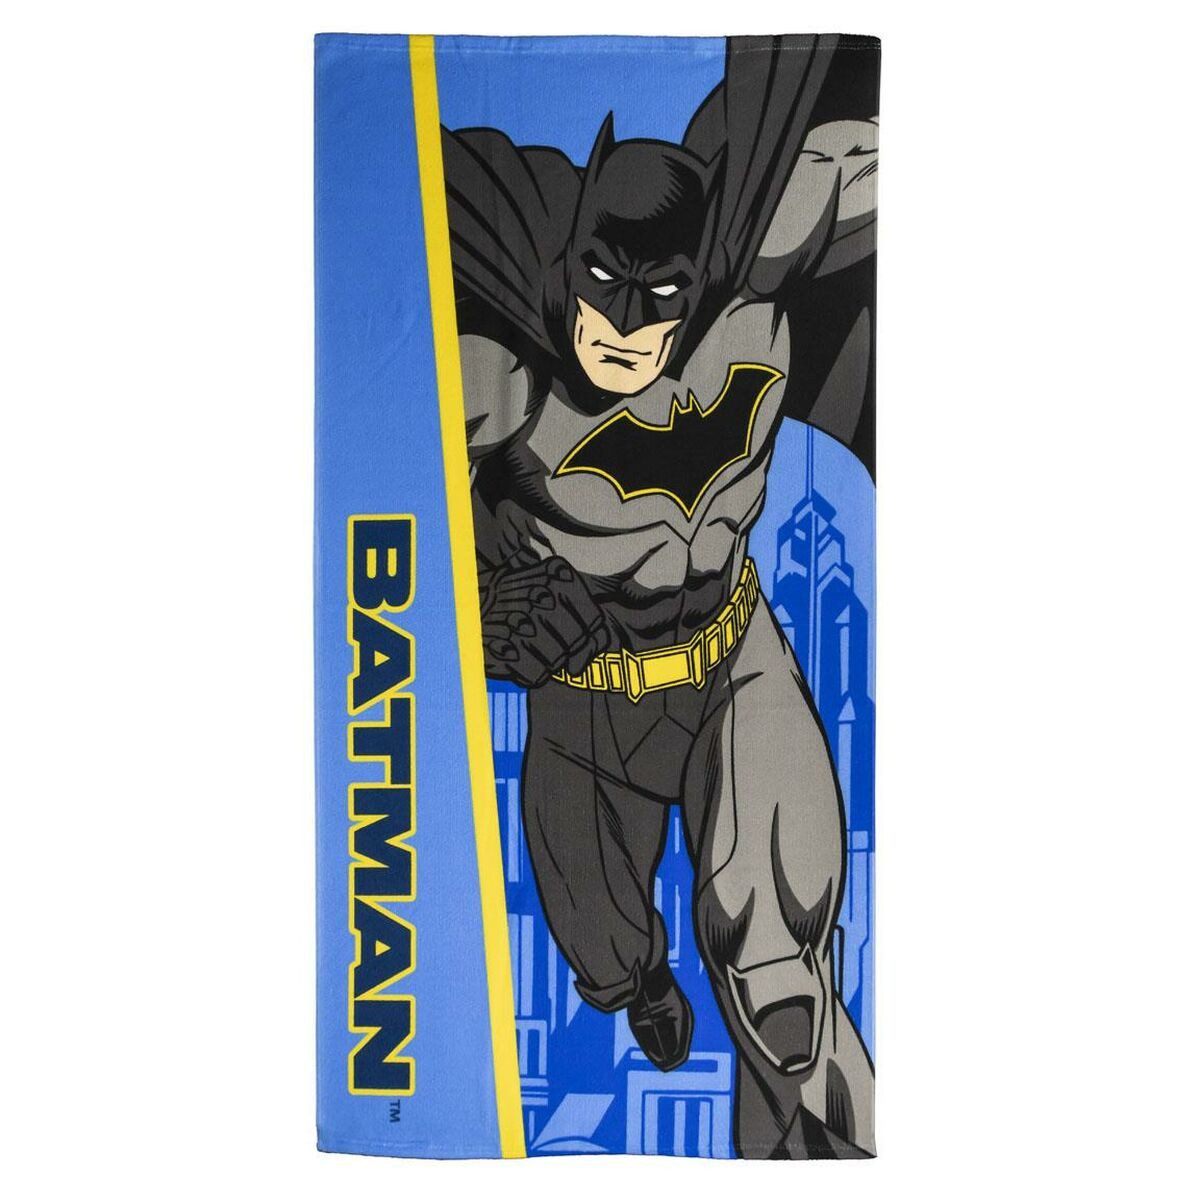 Batman Handtuch Handtuch Badetuch Duschtuch Batman Strandbadetuch Bunt 70 x 140 cm